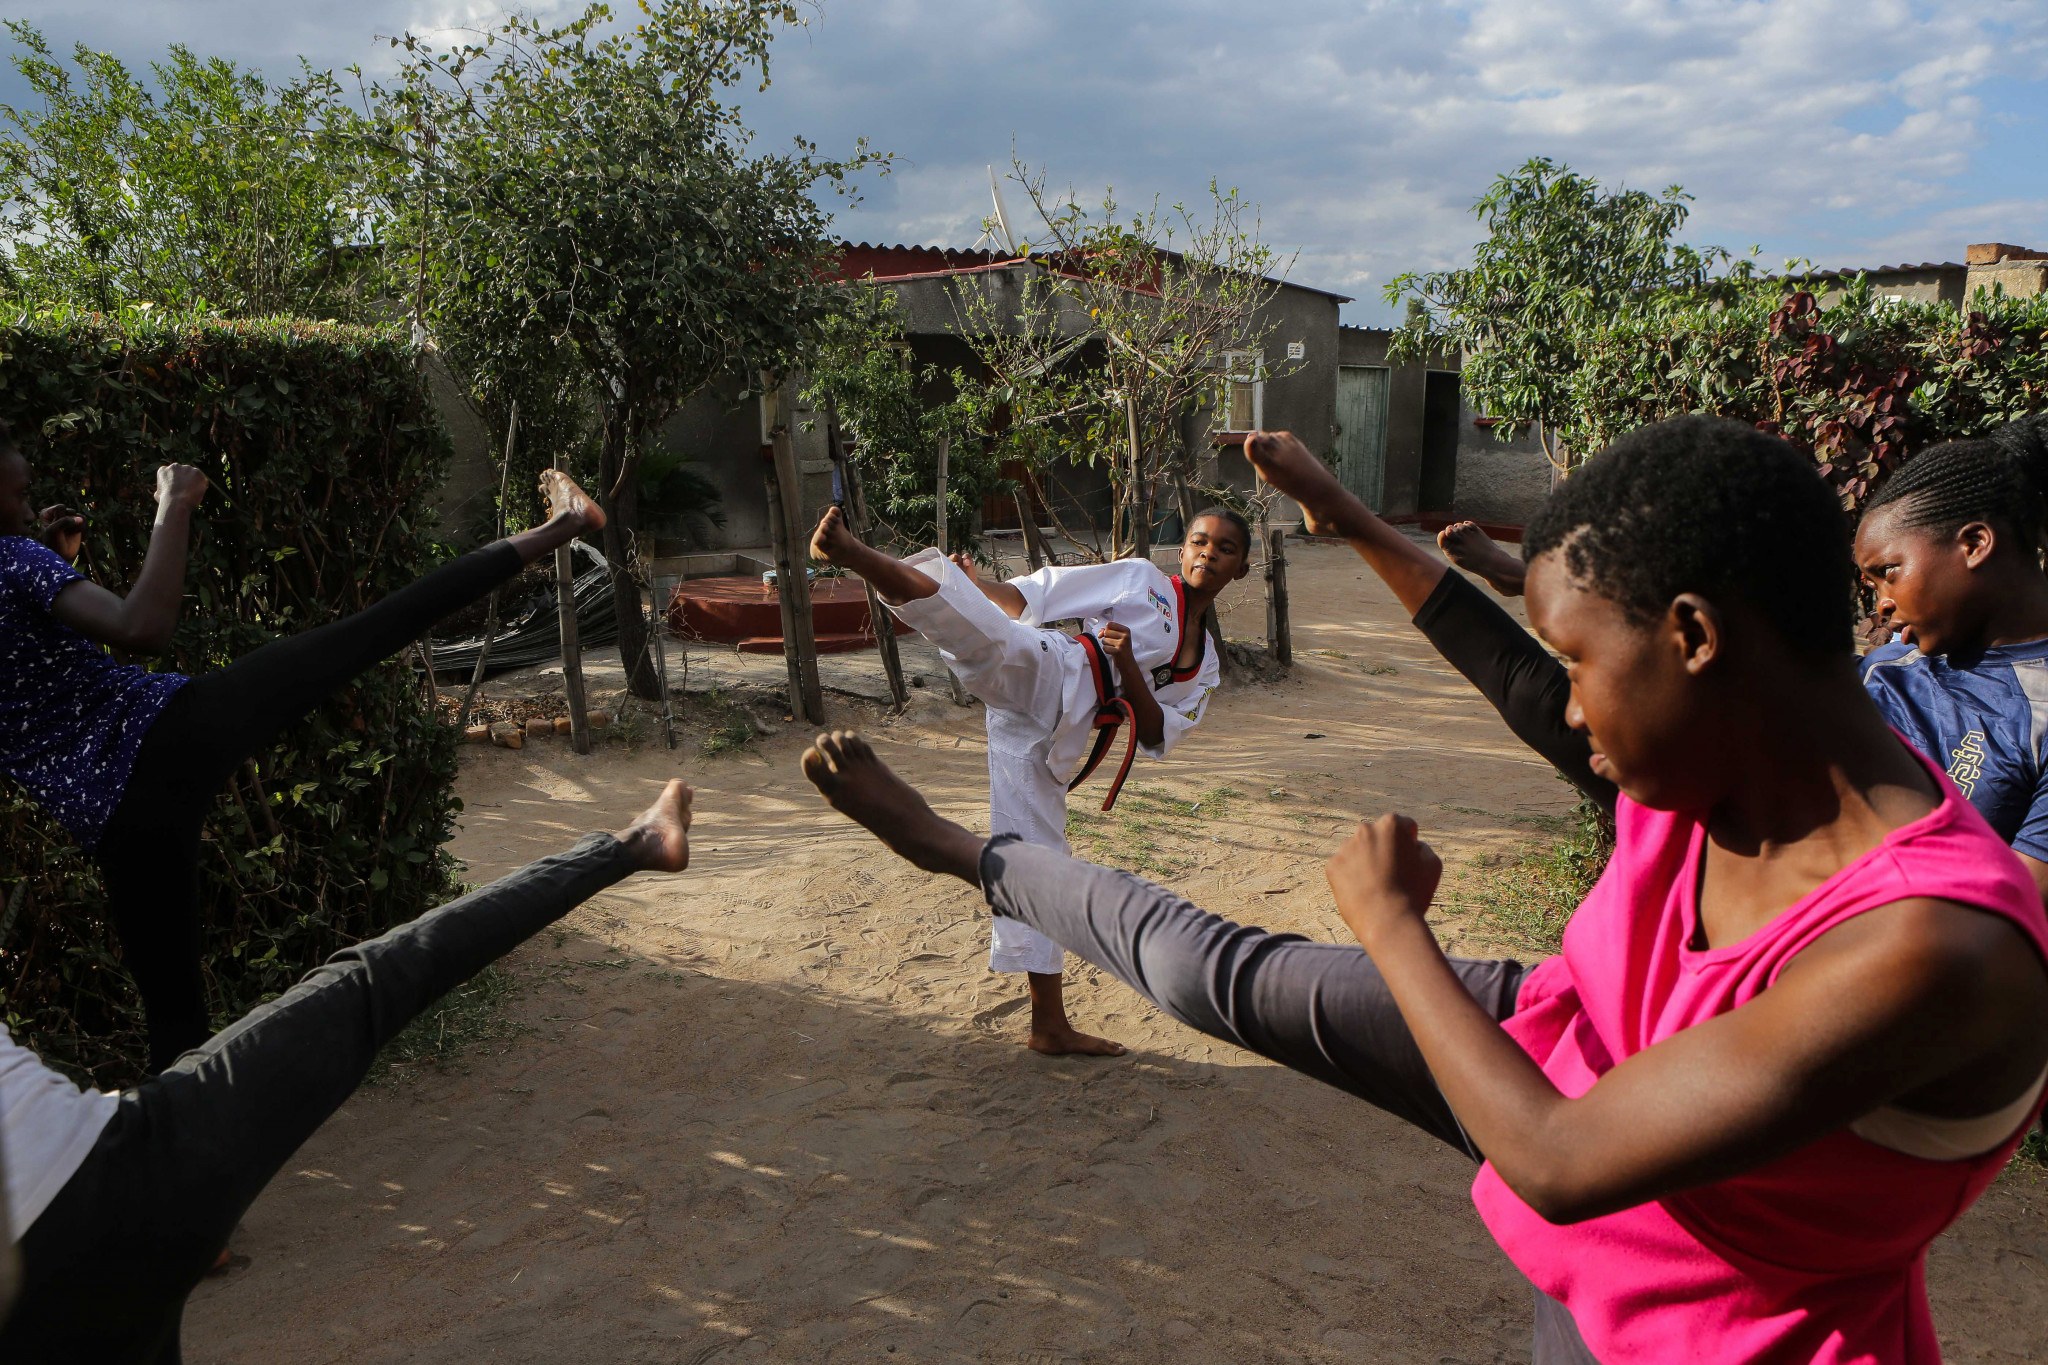 Taekwondo is an emerging sport in Zimbabwe ©Getty Images